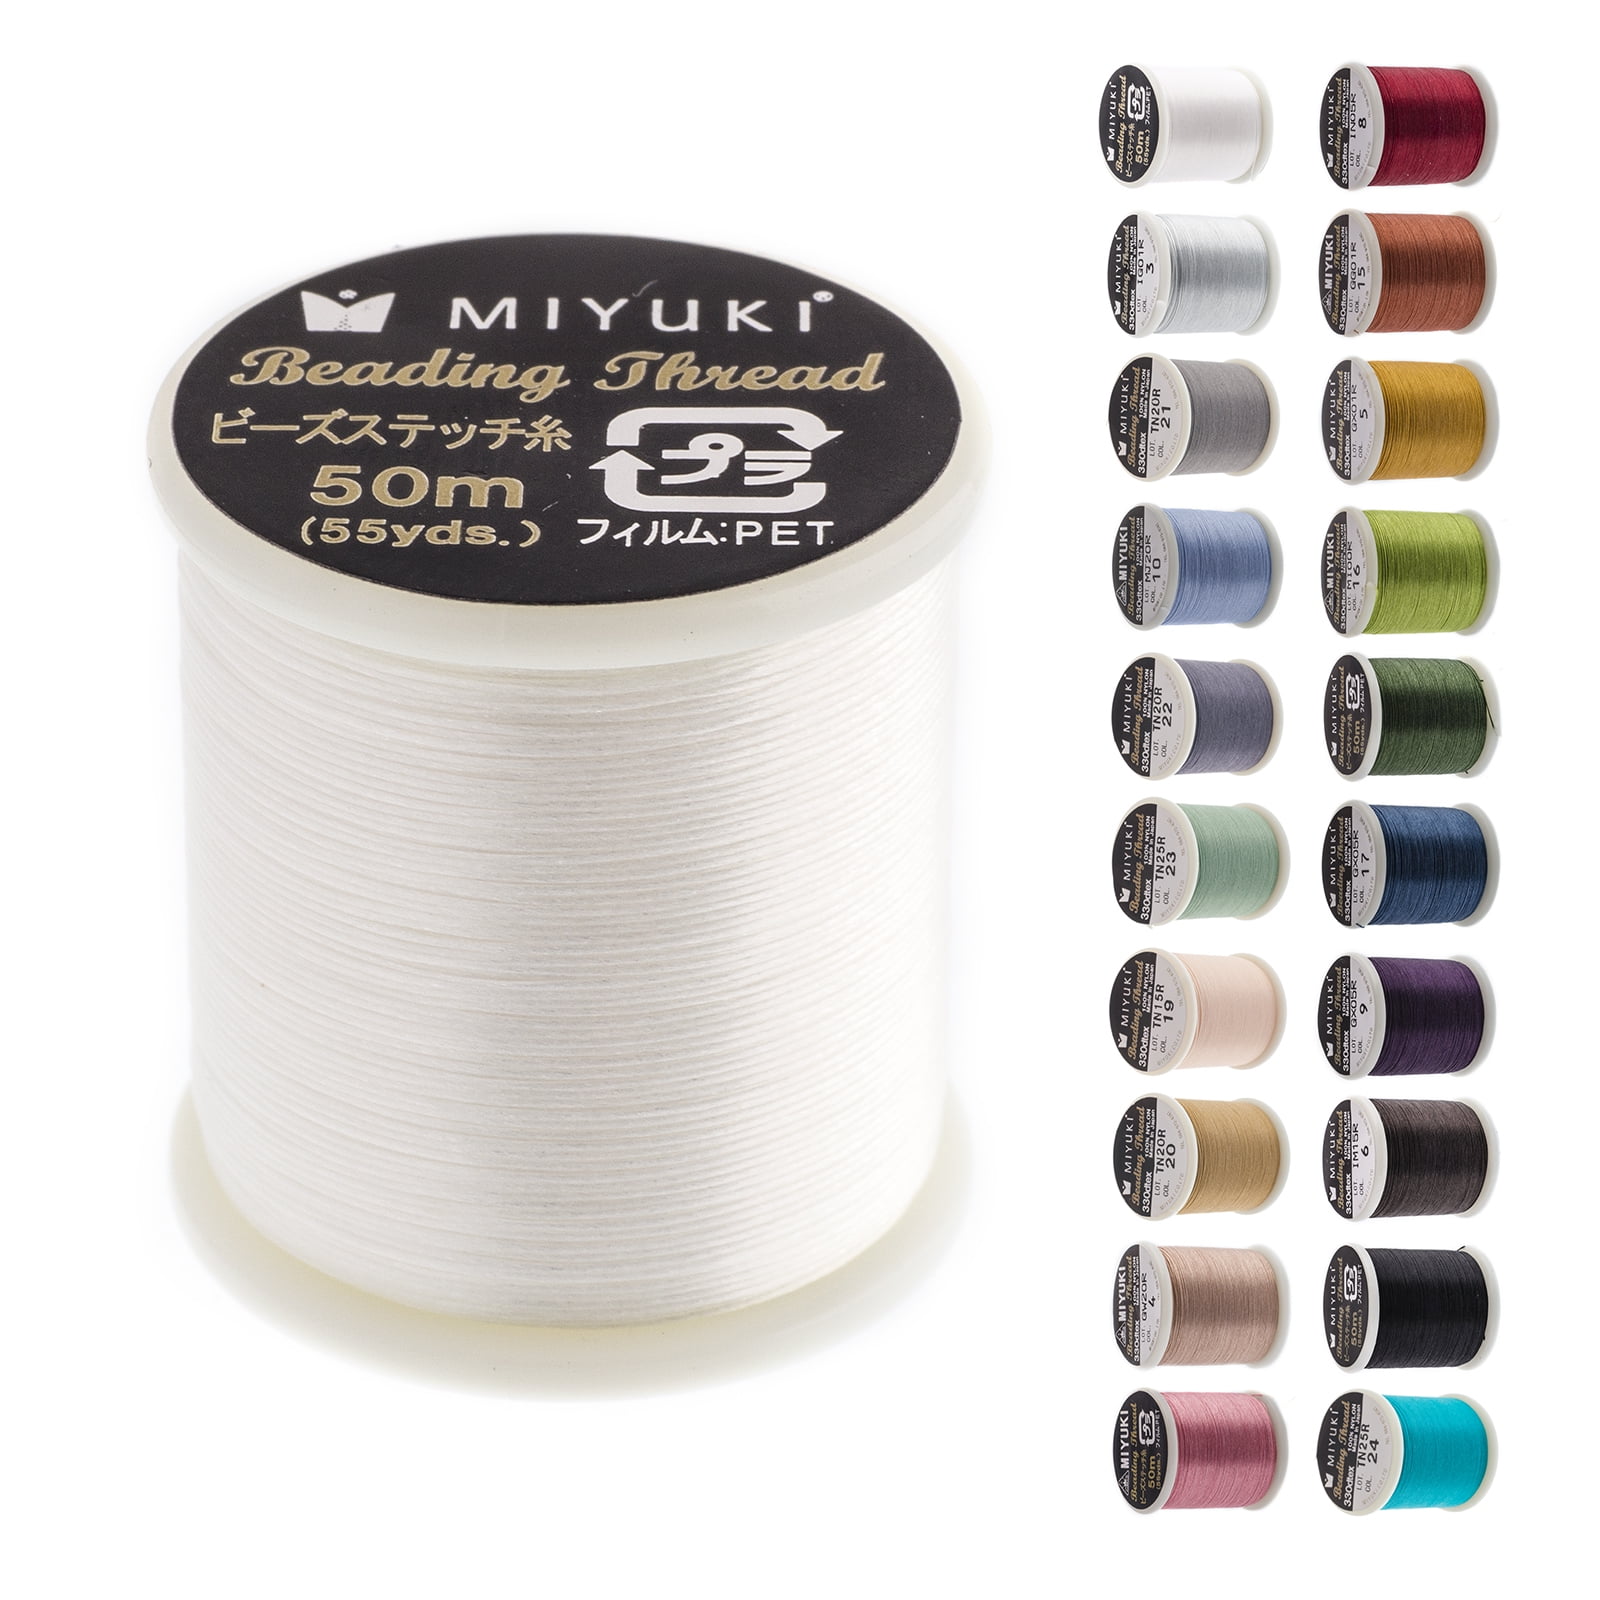 Caravan Beads - Miyuki - MNT-22: Charcoal Miyuki Nylon Beading Thread B  (50m) #MNT-22*